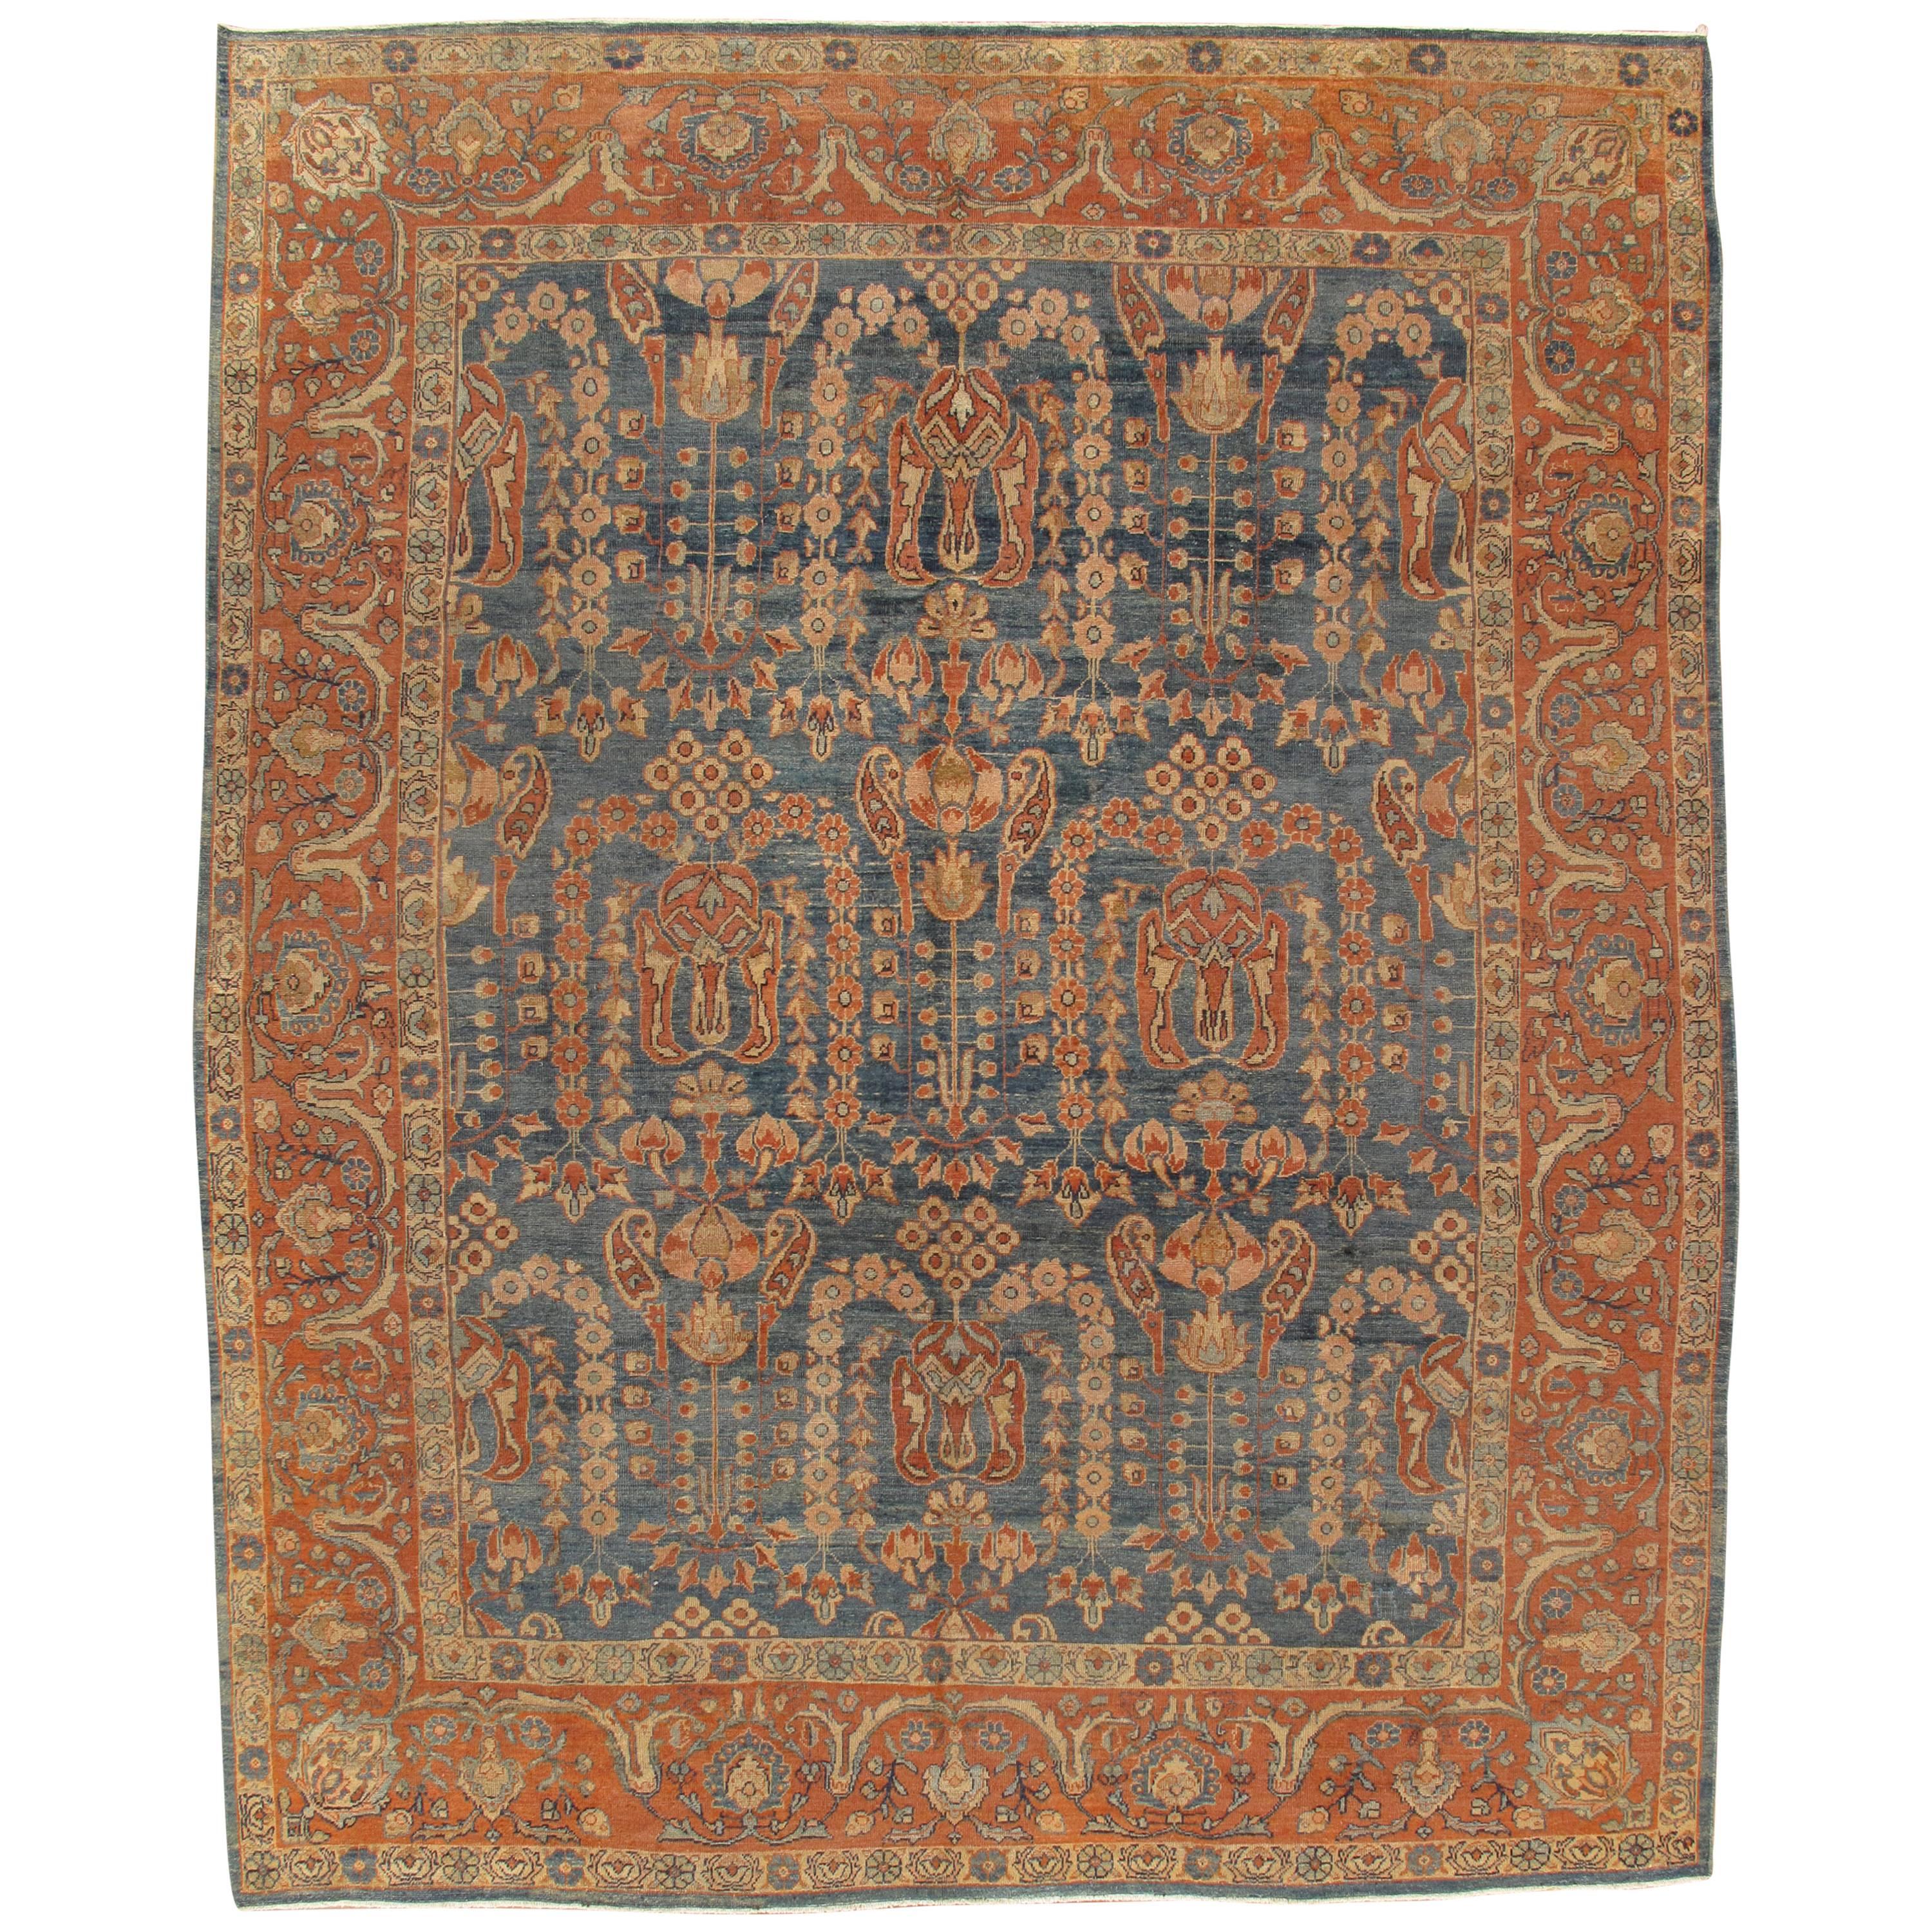 Antique Sultanabad Carpet, Oriental Rug, Handmade Persian Orange Soft Light Blue